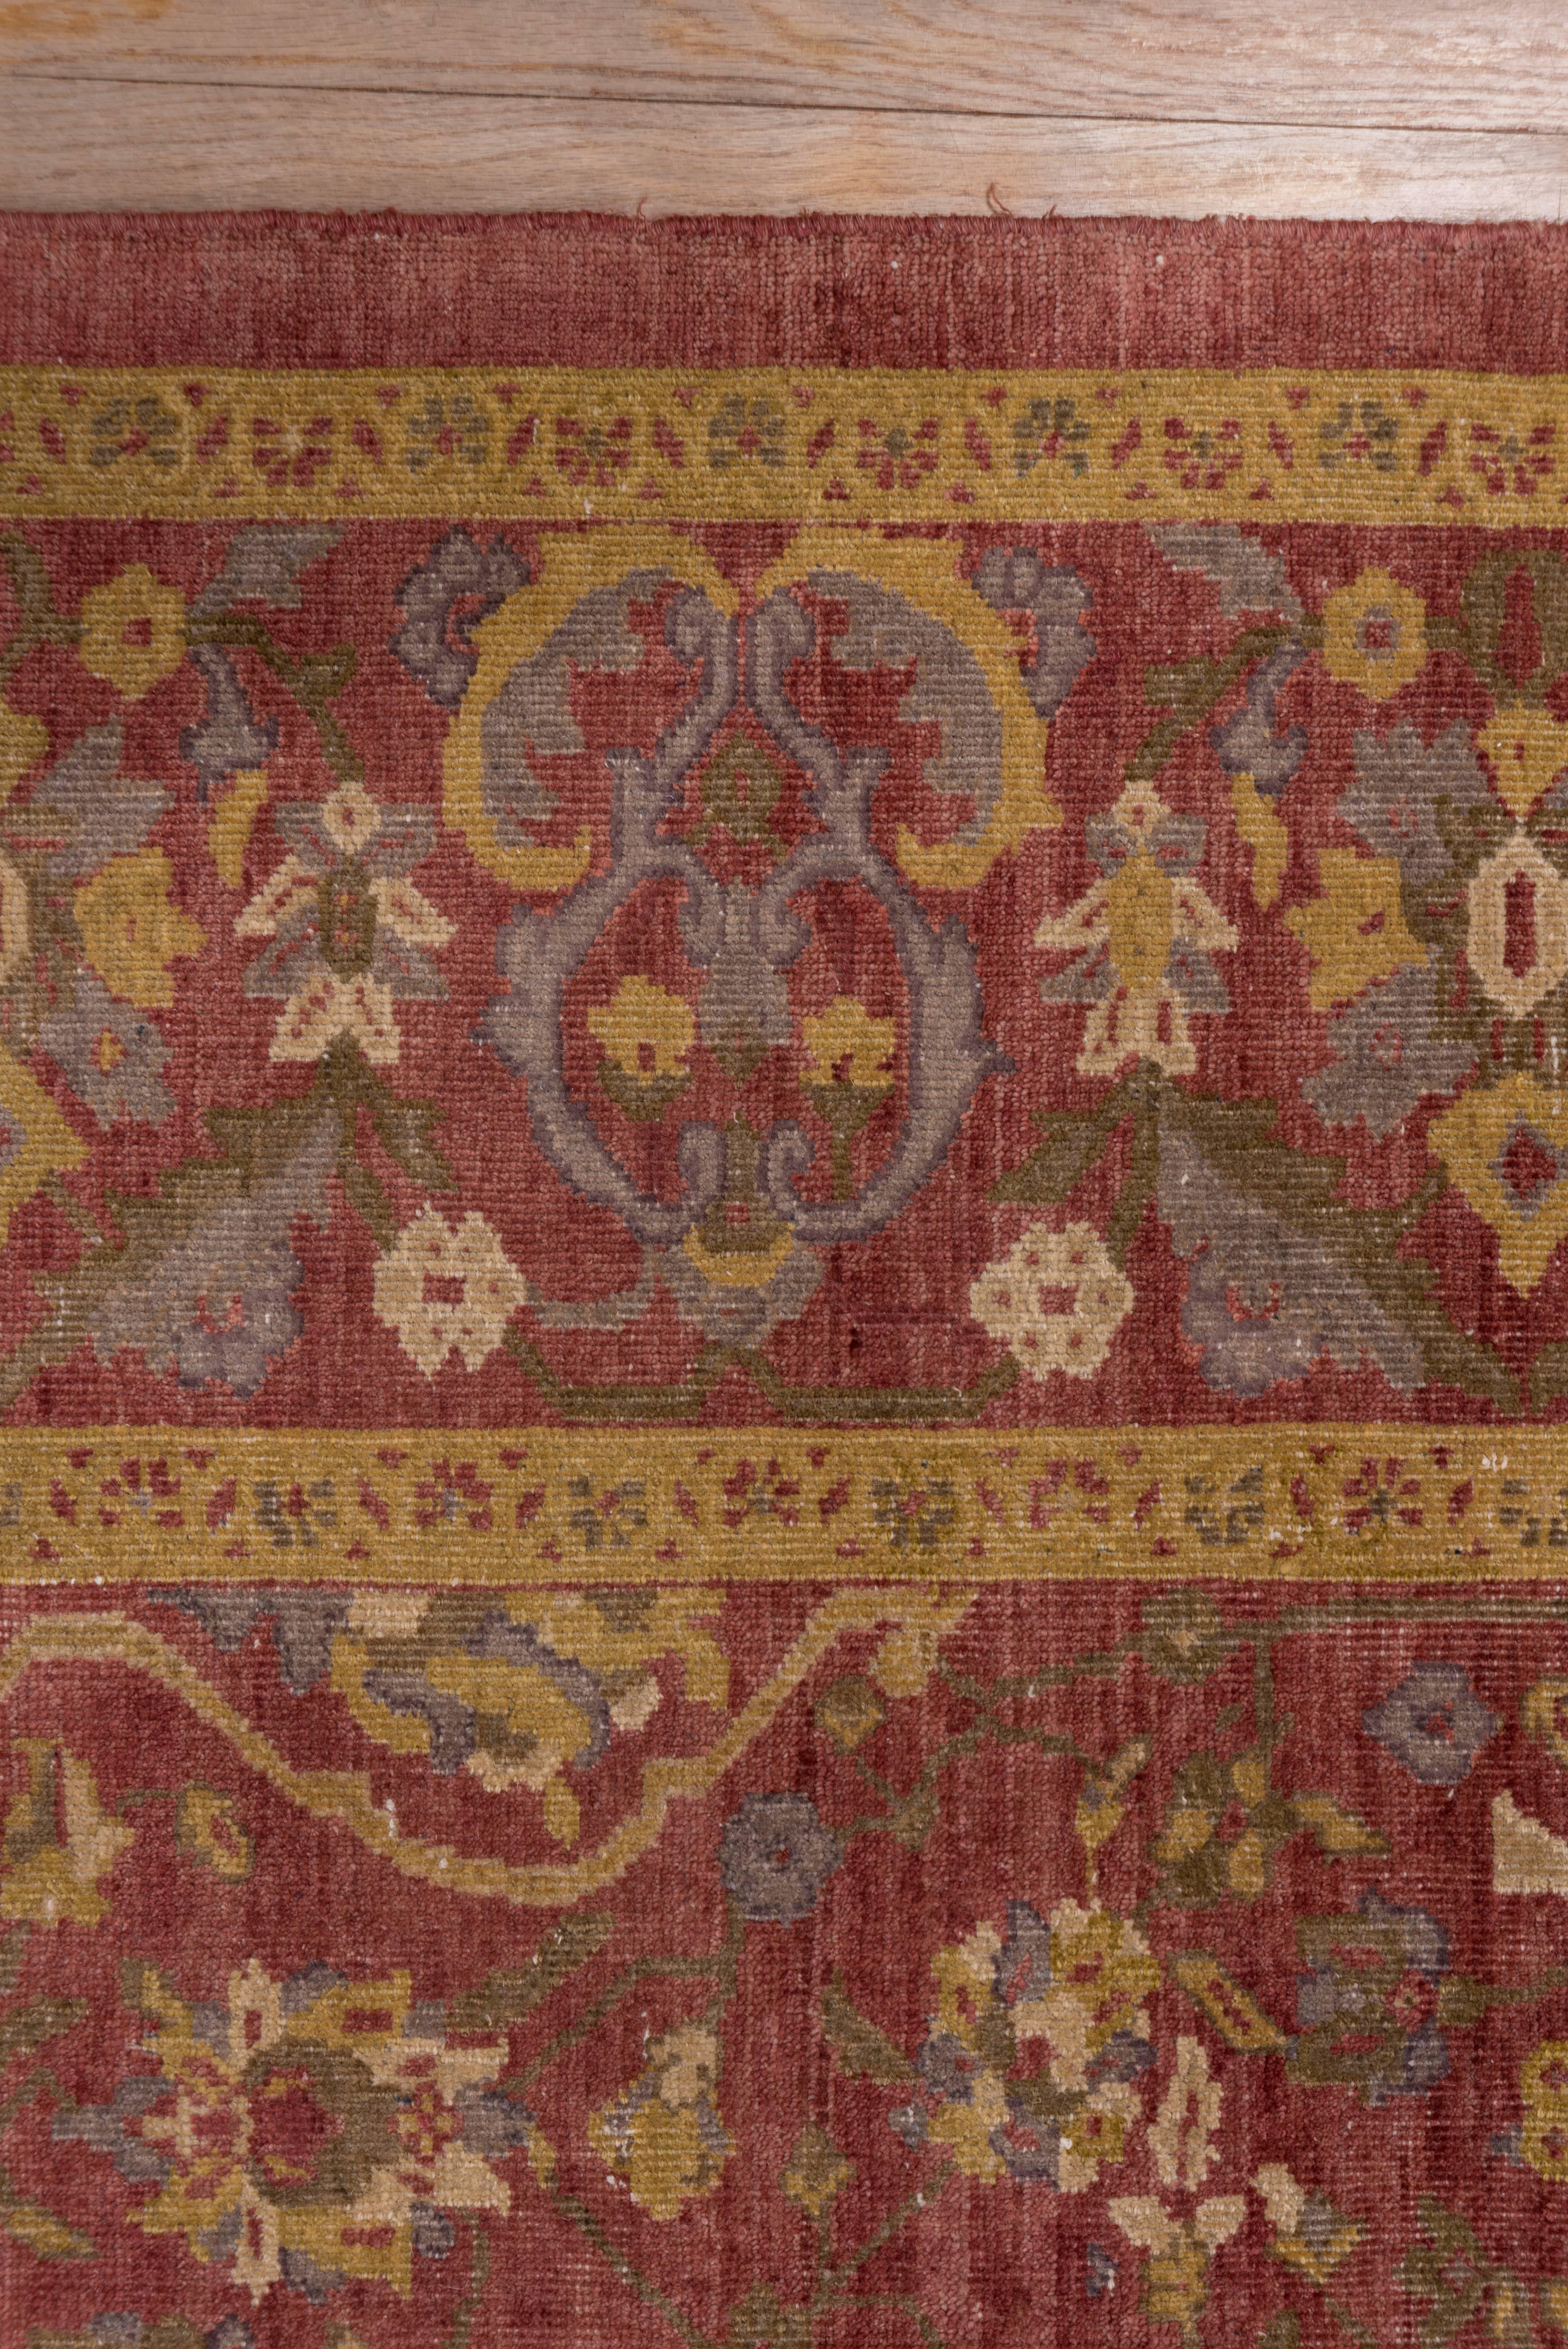 Antique Mahal Carpet, Circa 1920s, Red Field 1